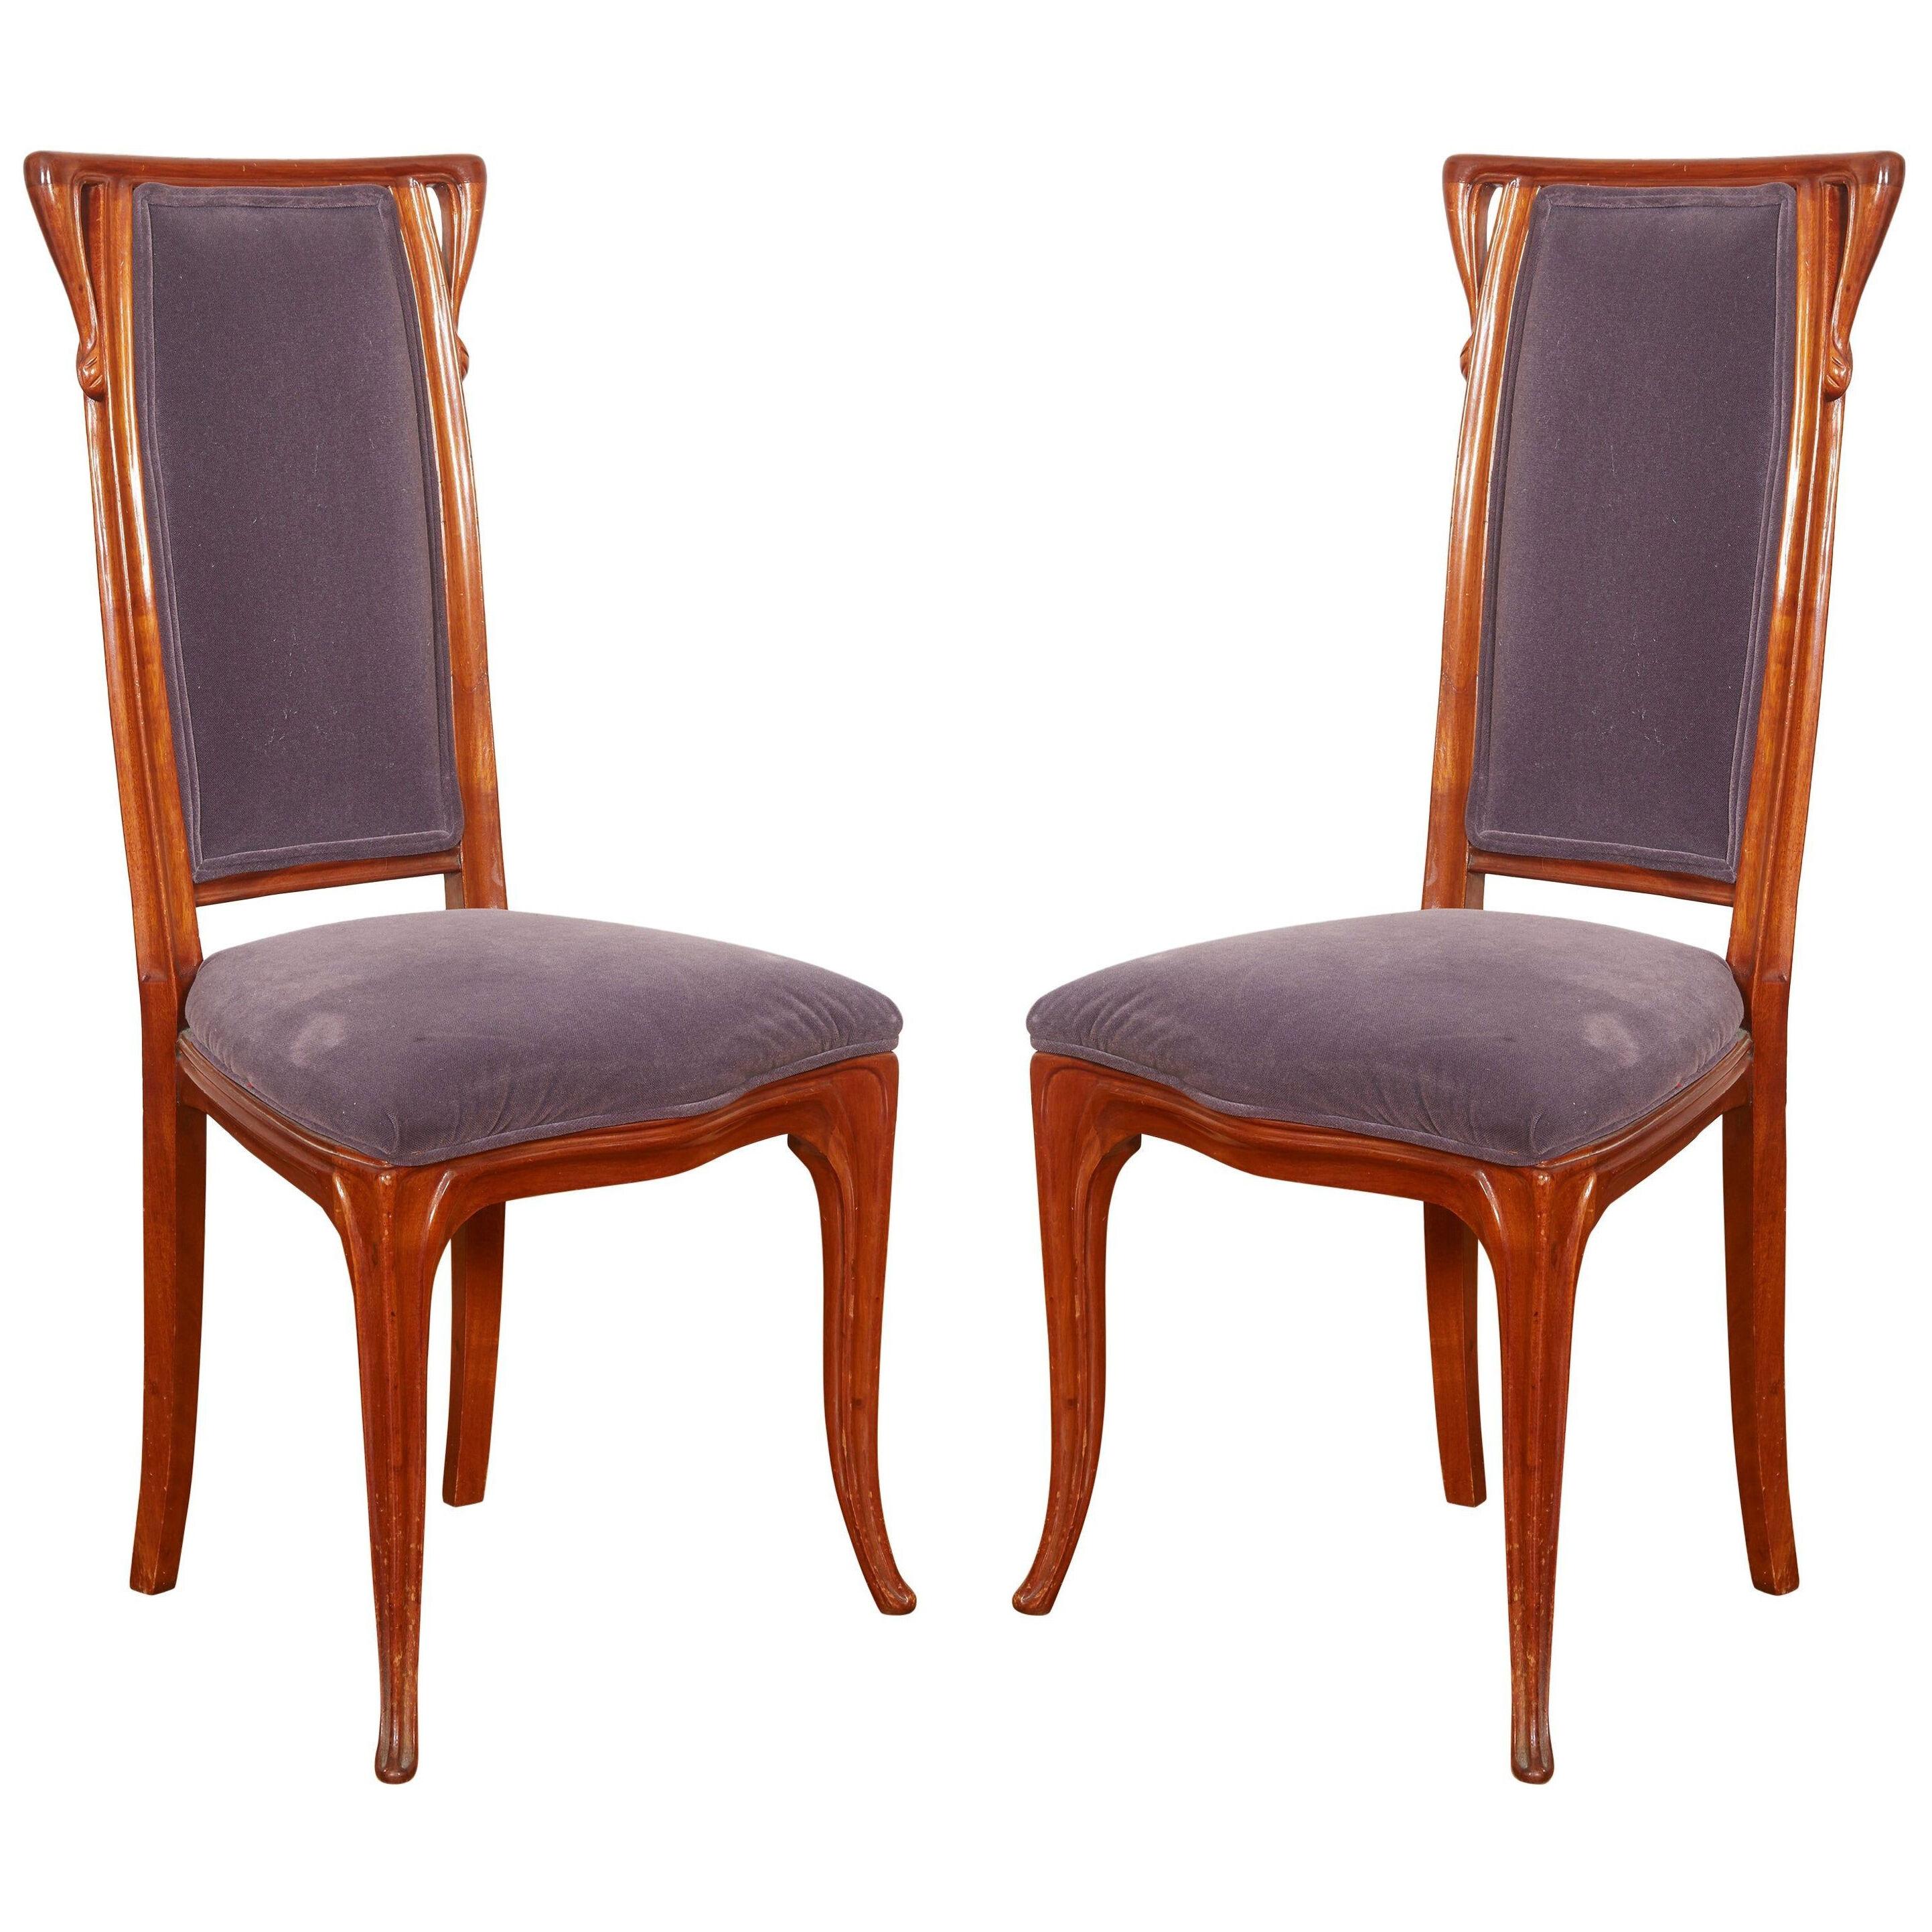 French Art Nouveau Chairs by Louis Majorelle